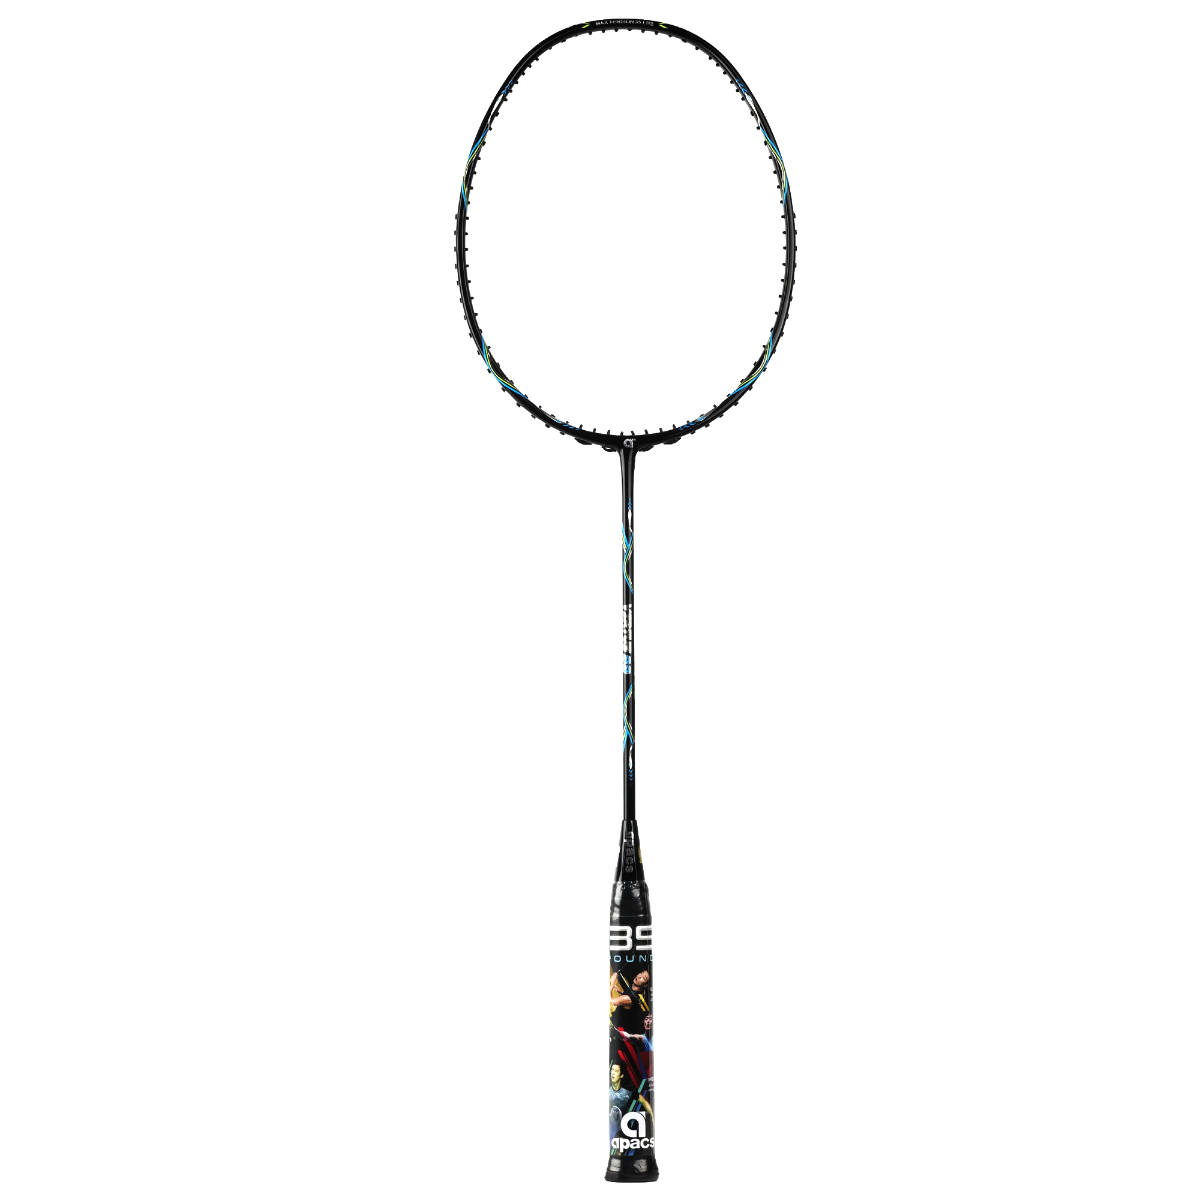 Apacs Virtus 33 Badminton Racquet - Unstrung